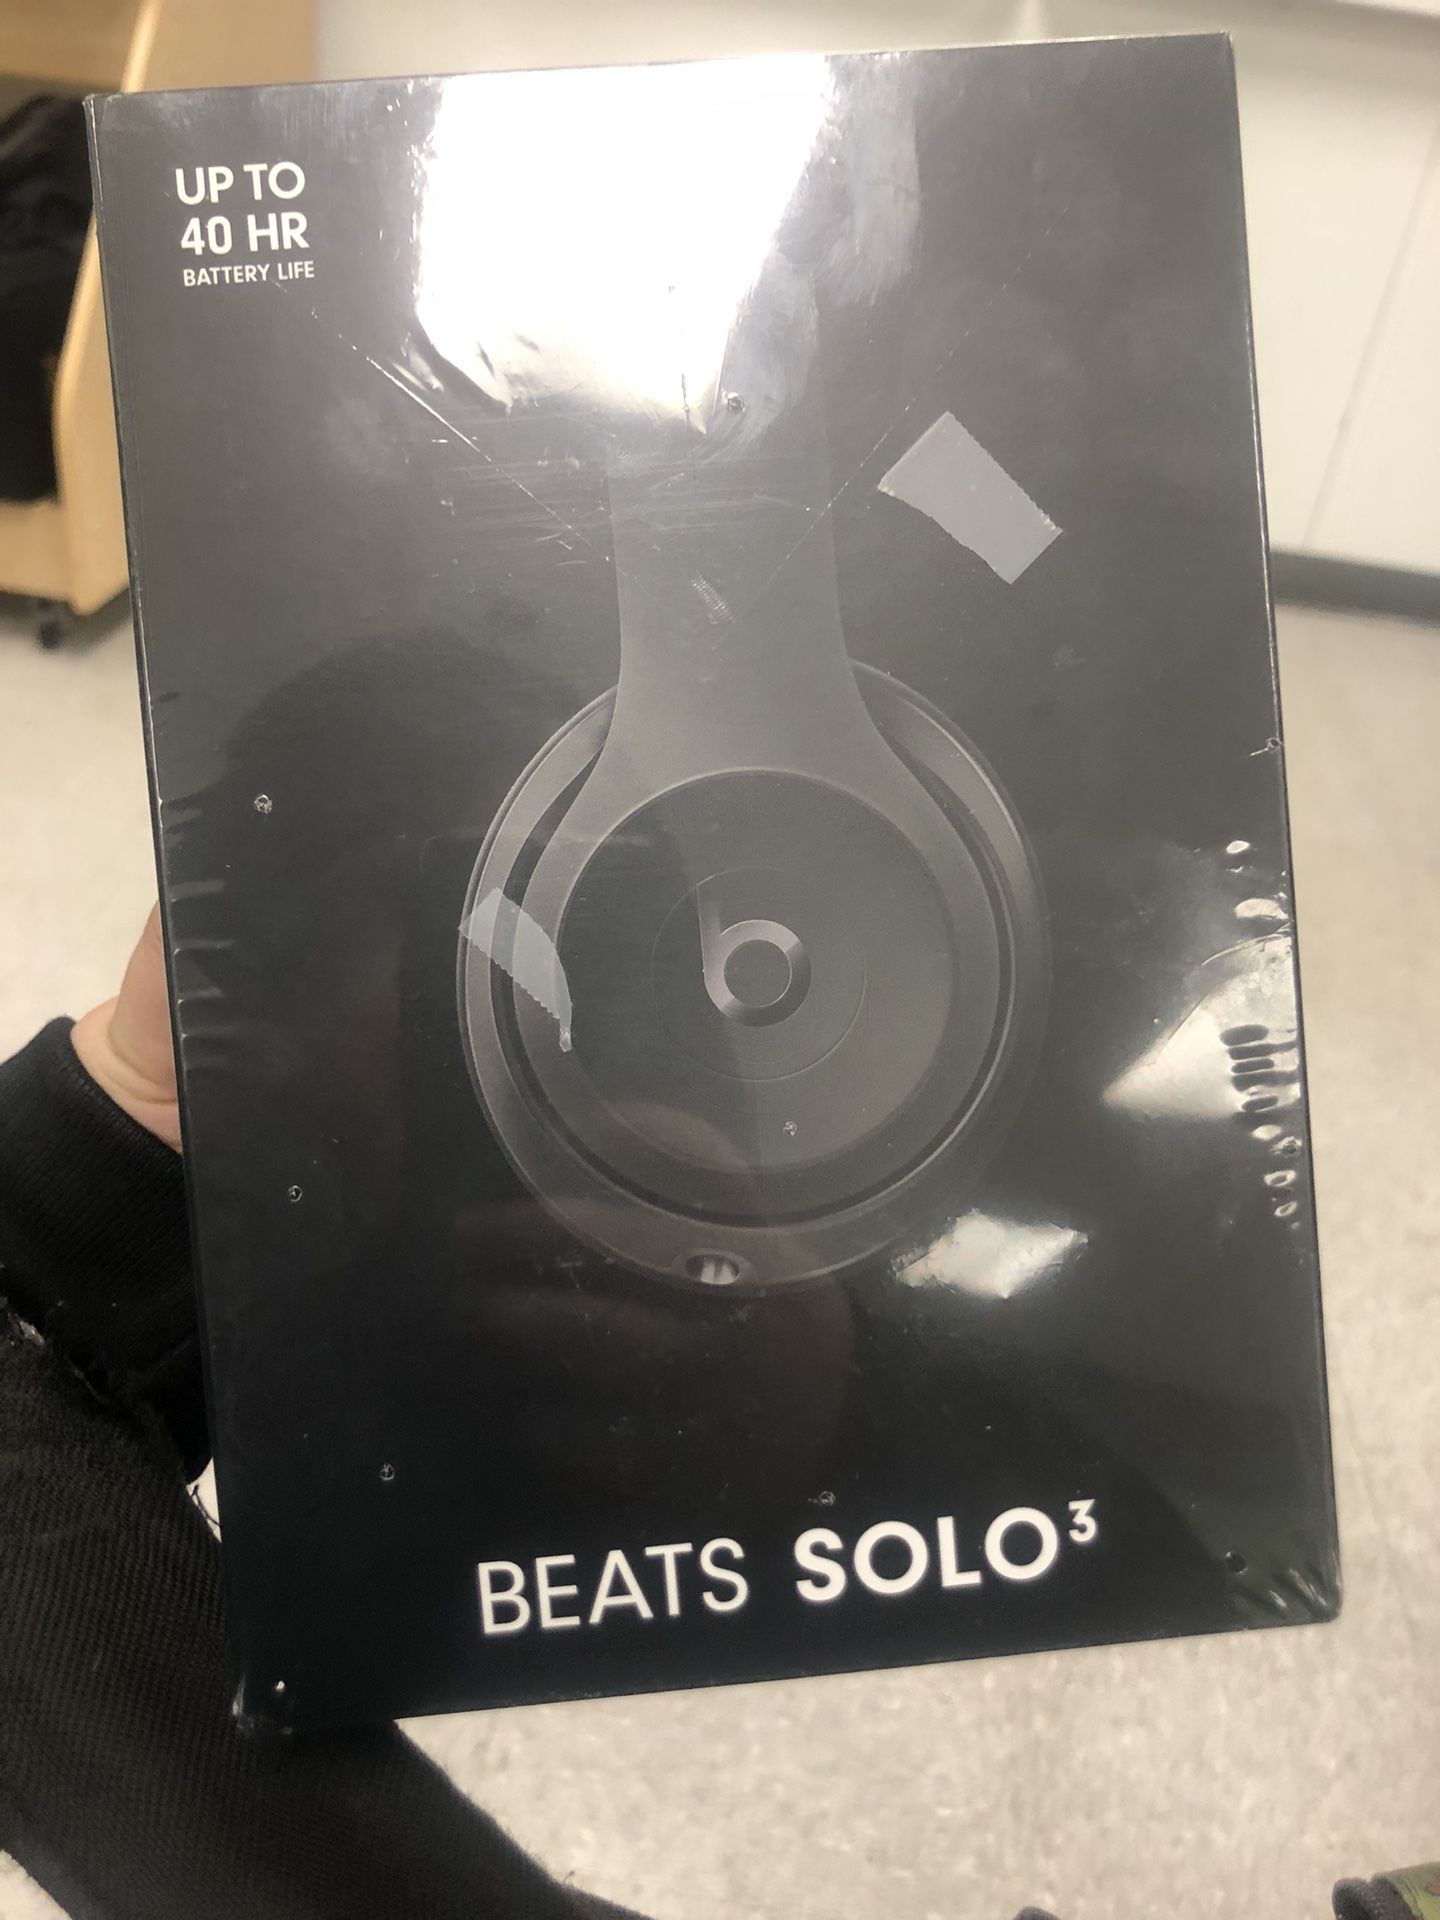 Beats Solo 3’s 